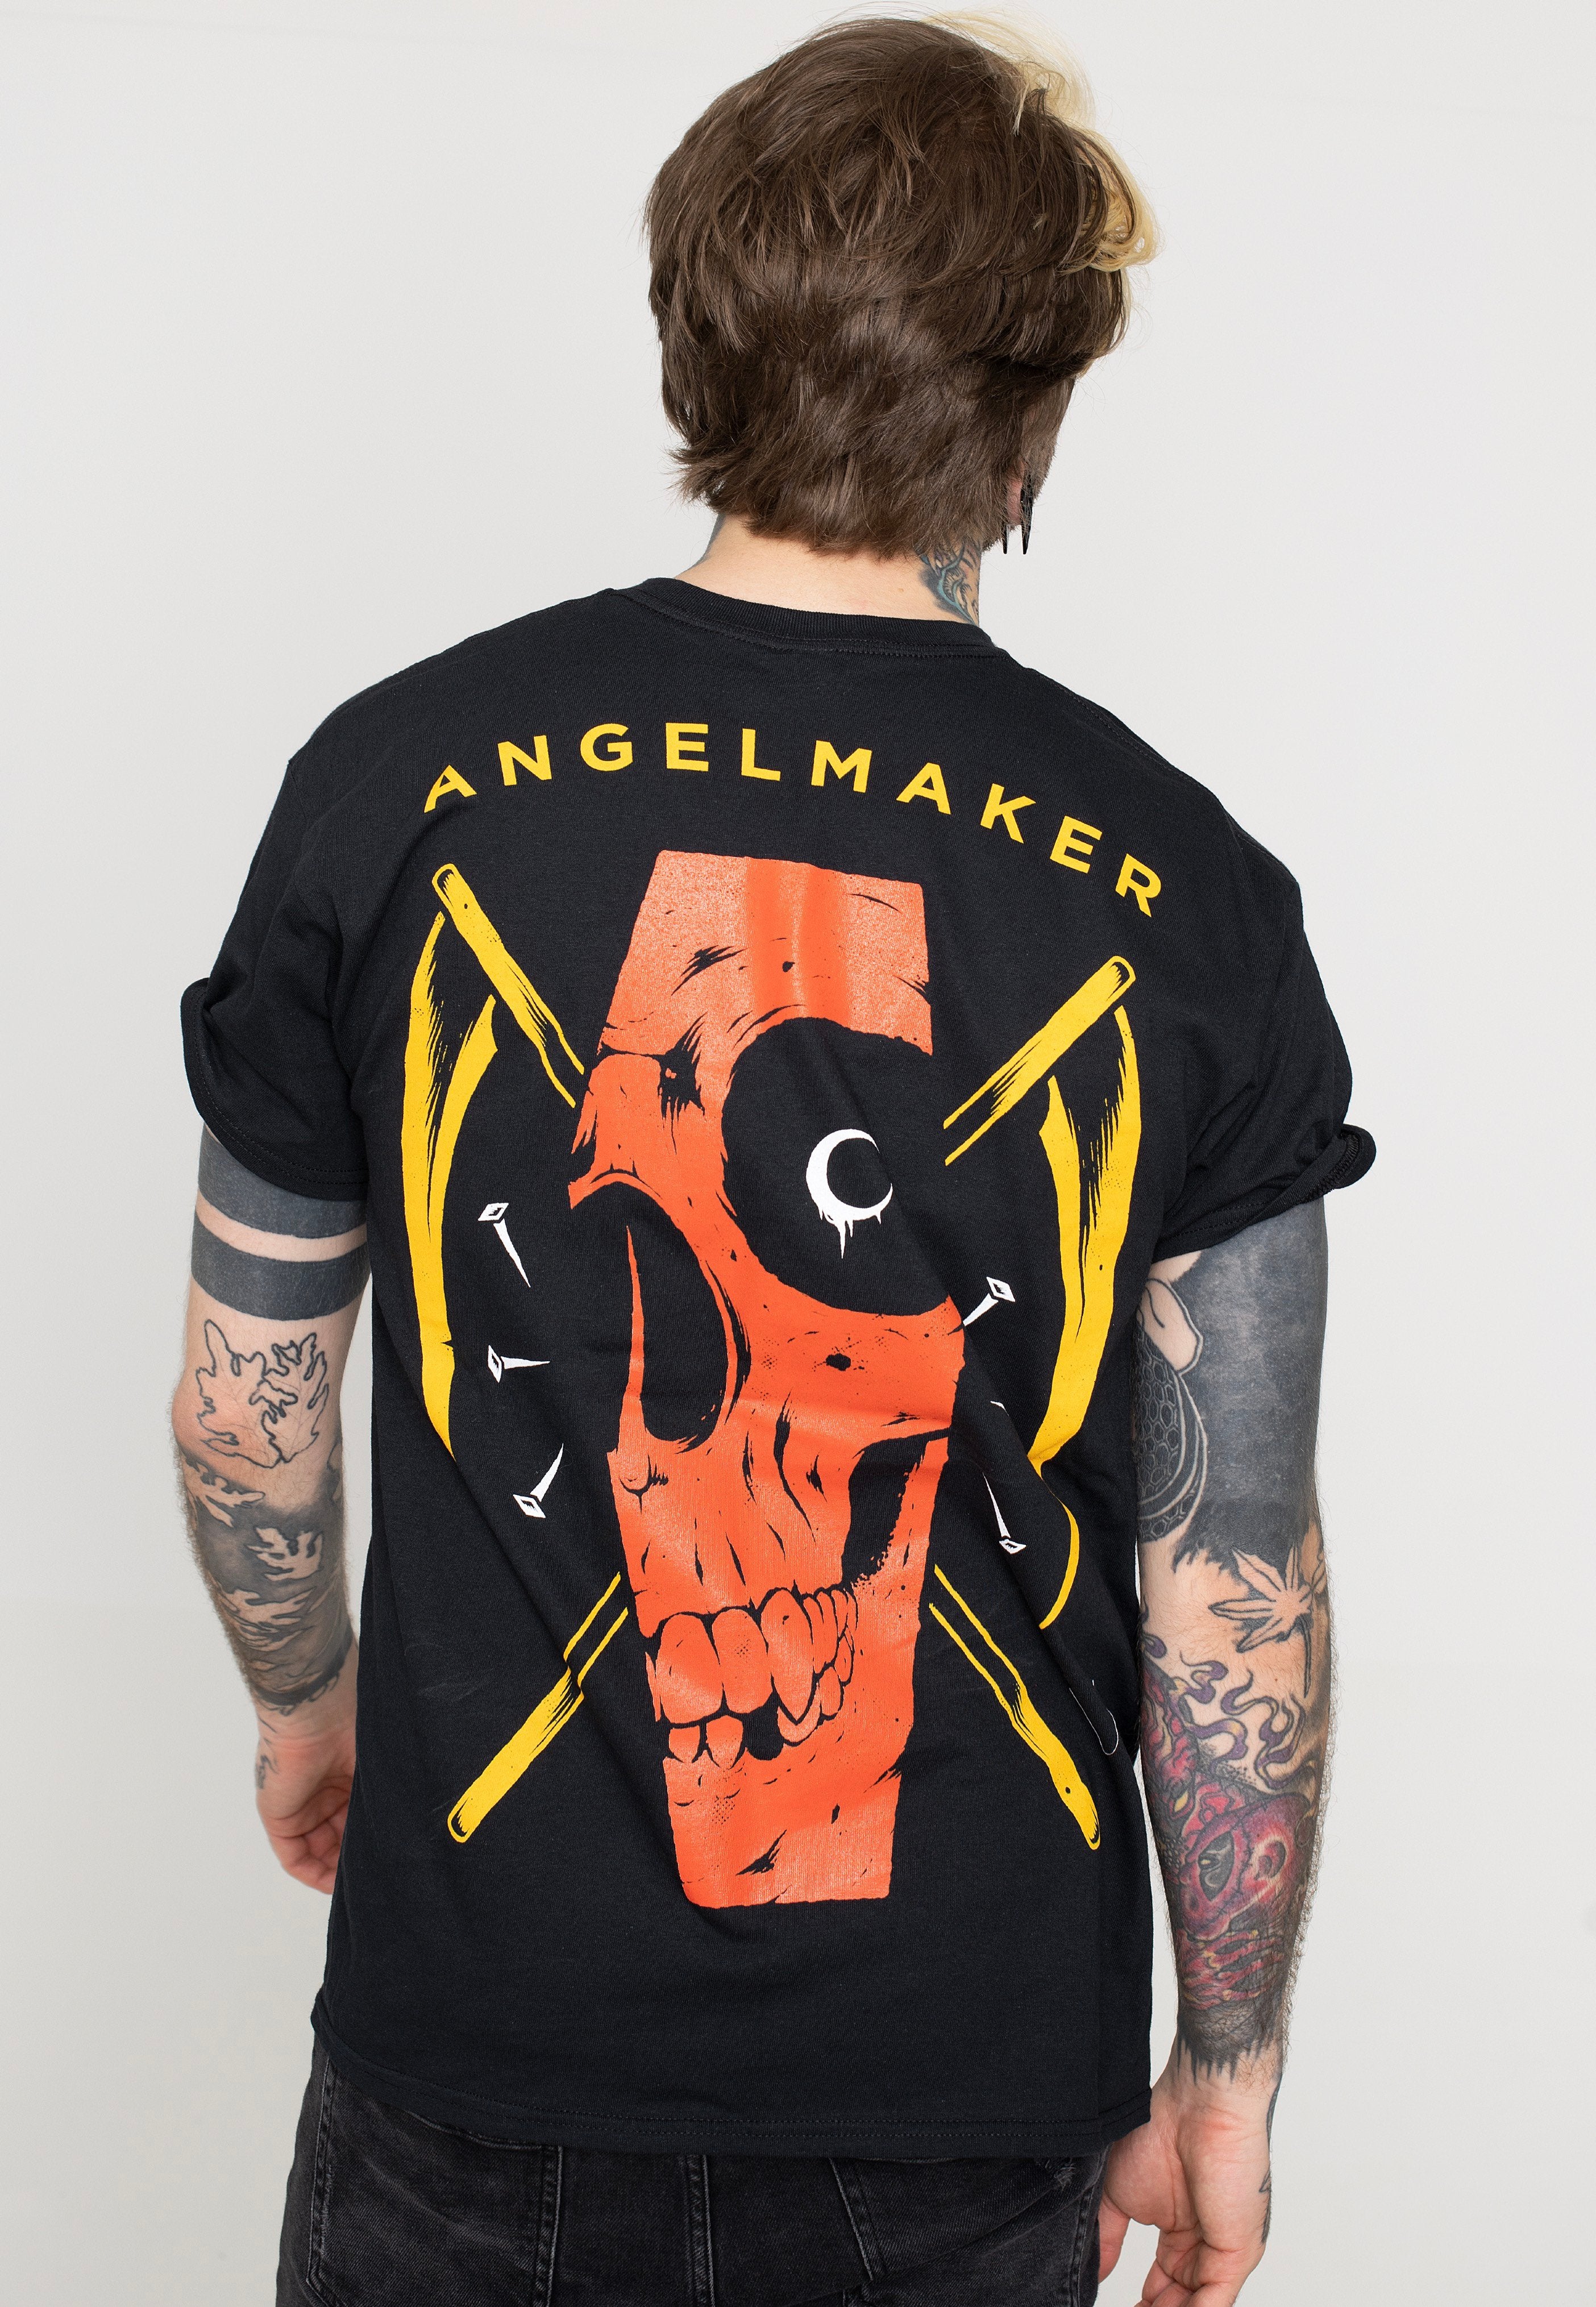 AngelMaker - Misery - T-Shirt